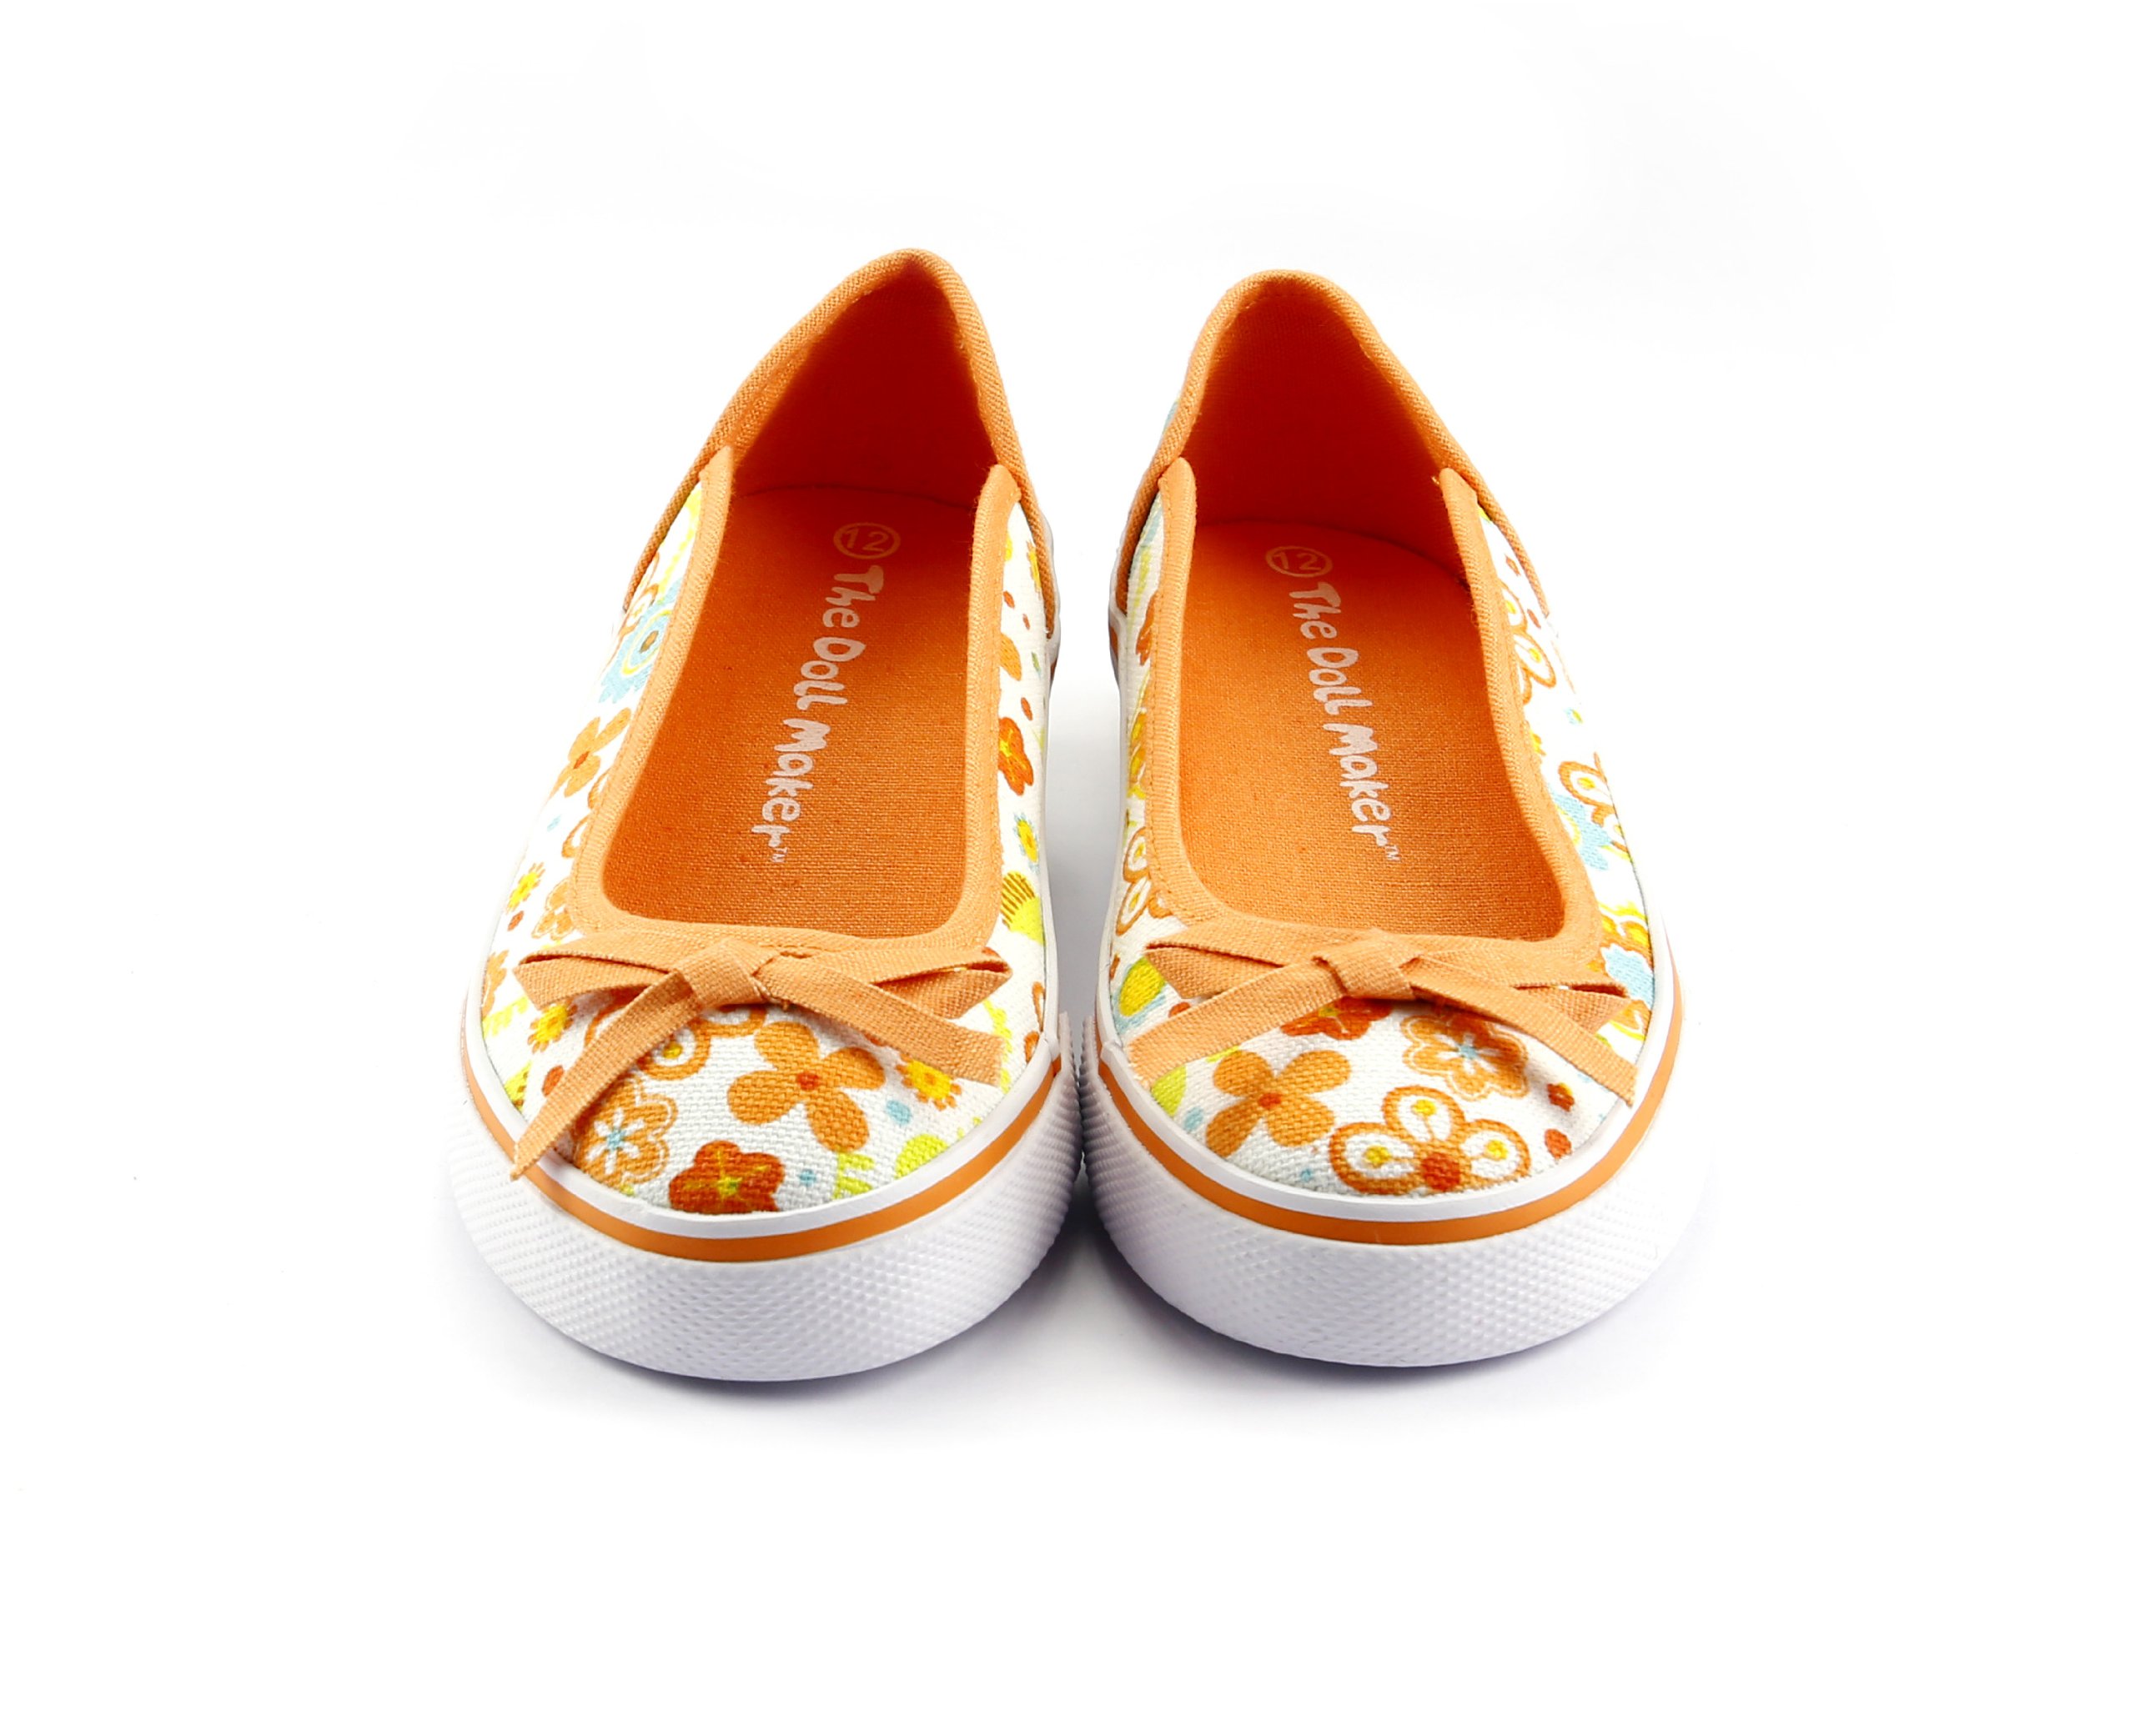 Size 12 Girl's Shoes Slip On Fashion Sneaker Orange Floral Prints canvas